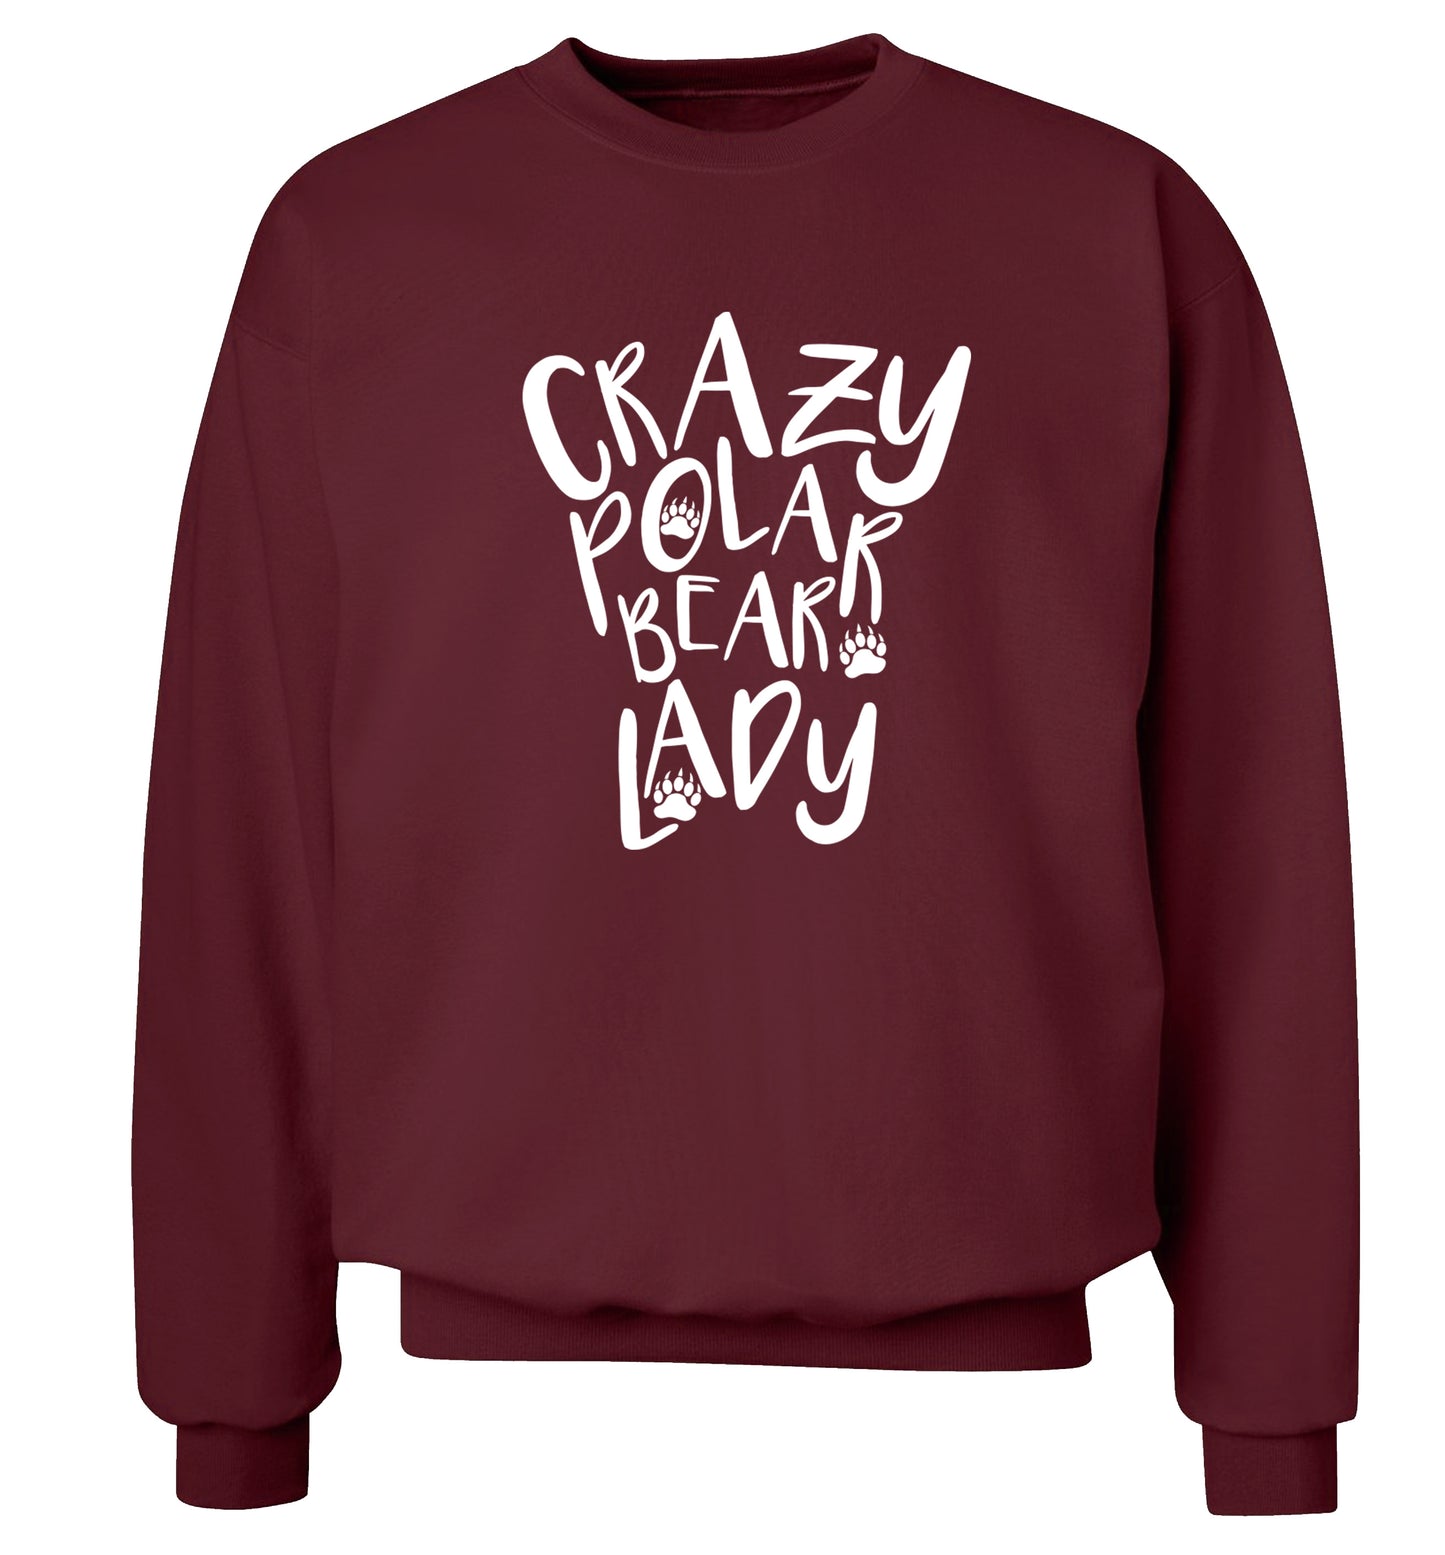 Crazy polar bear lady Adult's unisex maroon Sweater 2XL